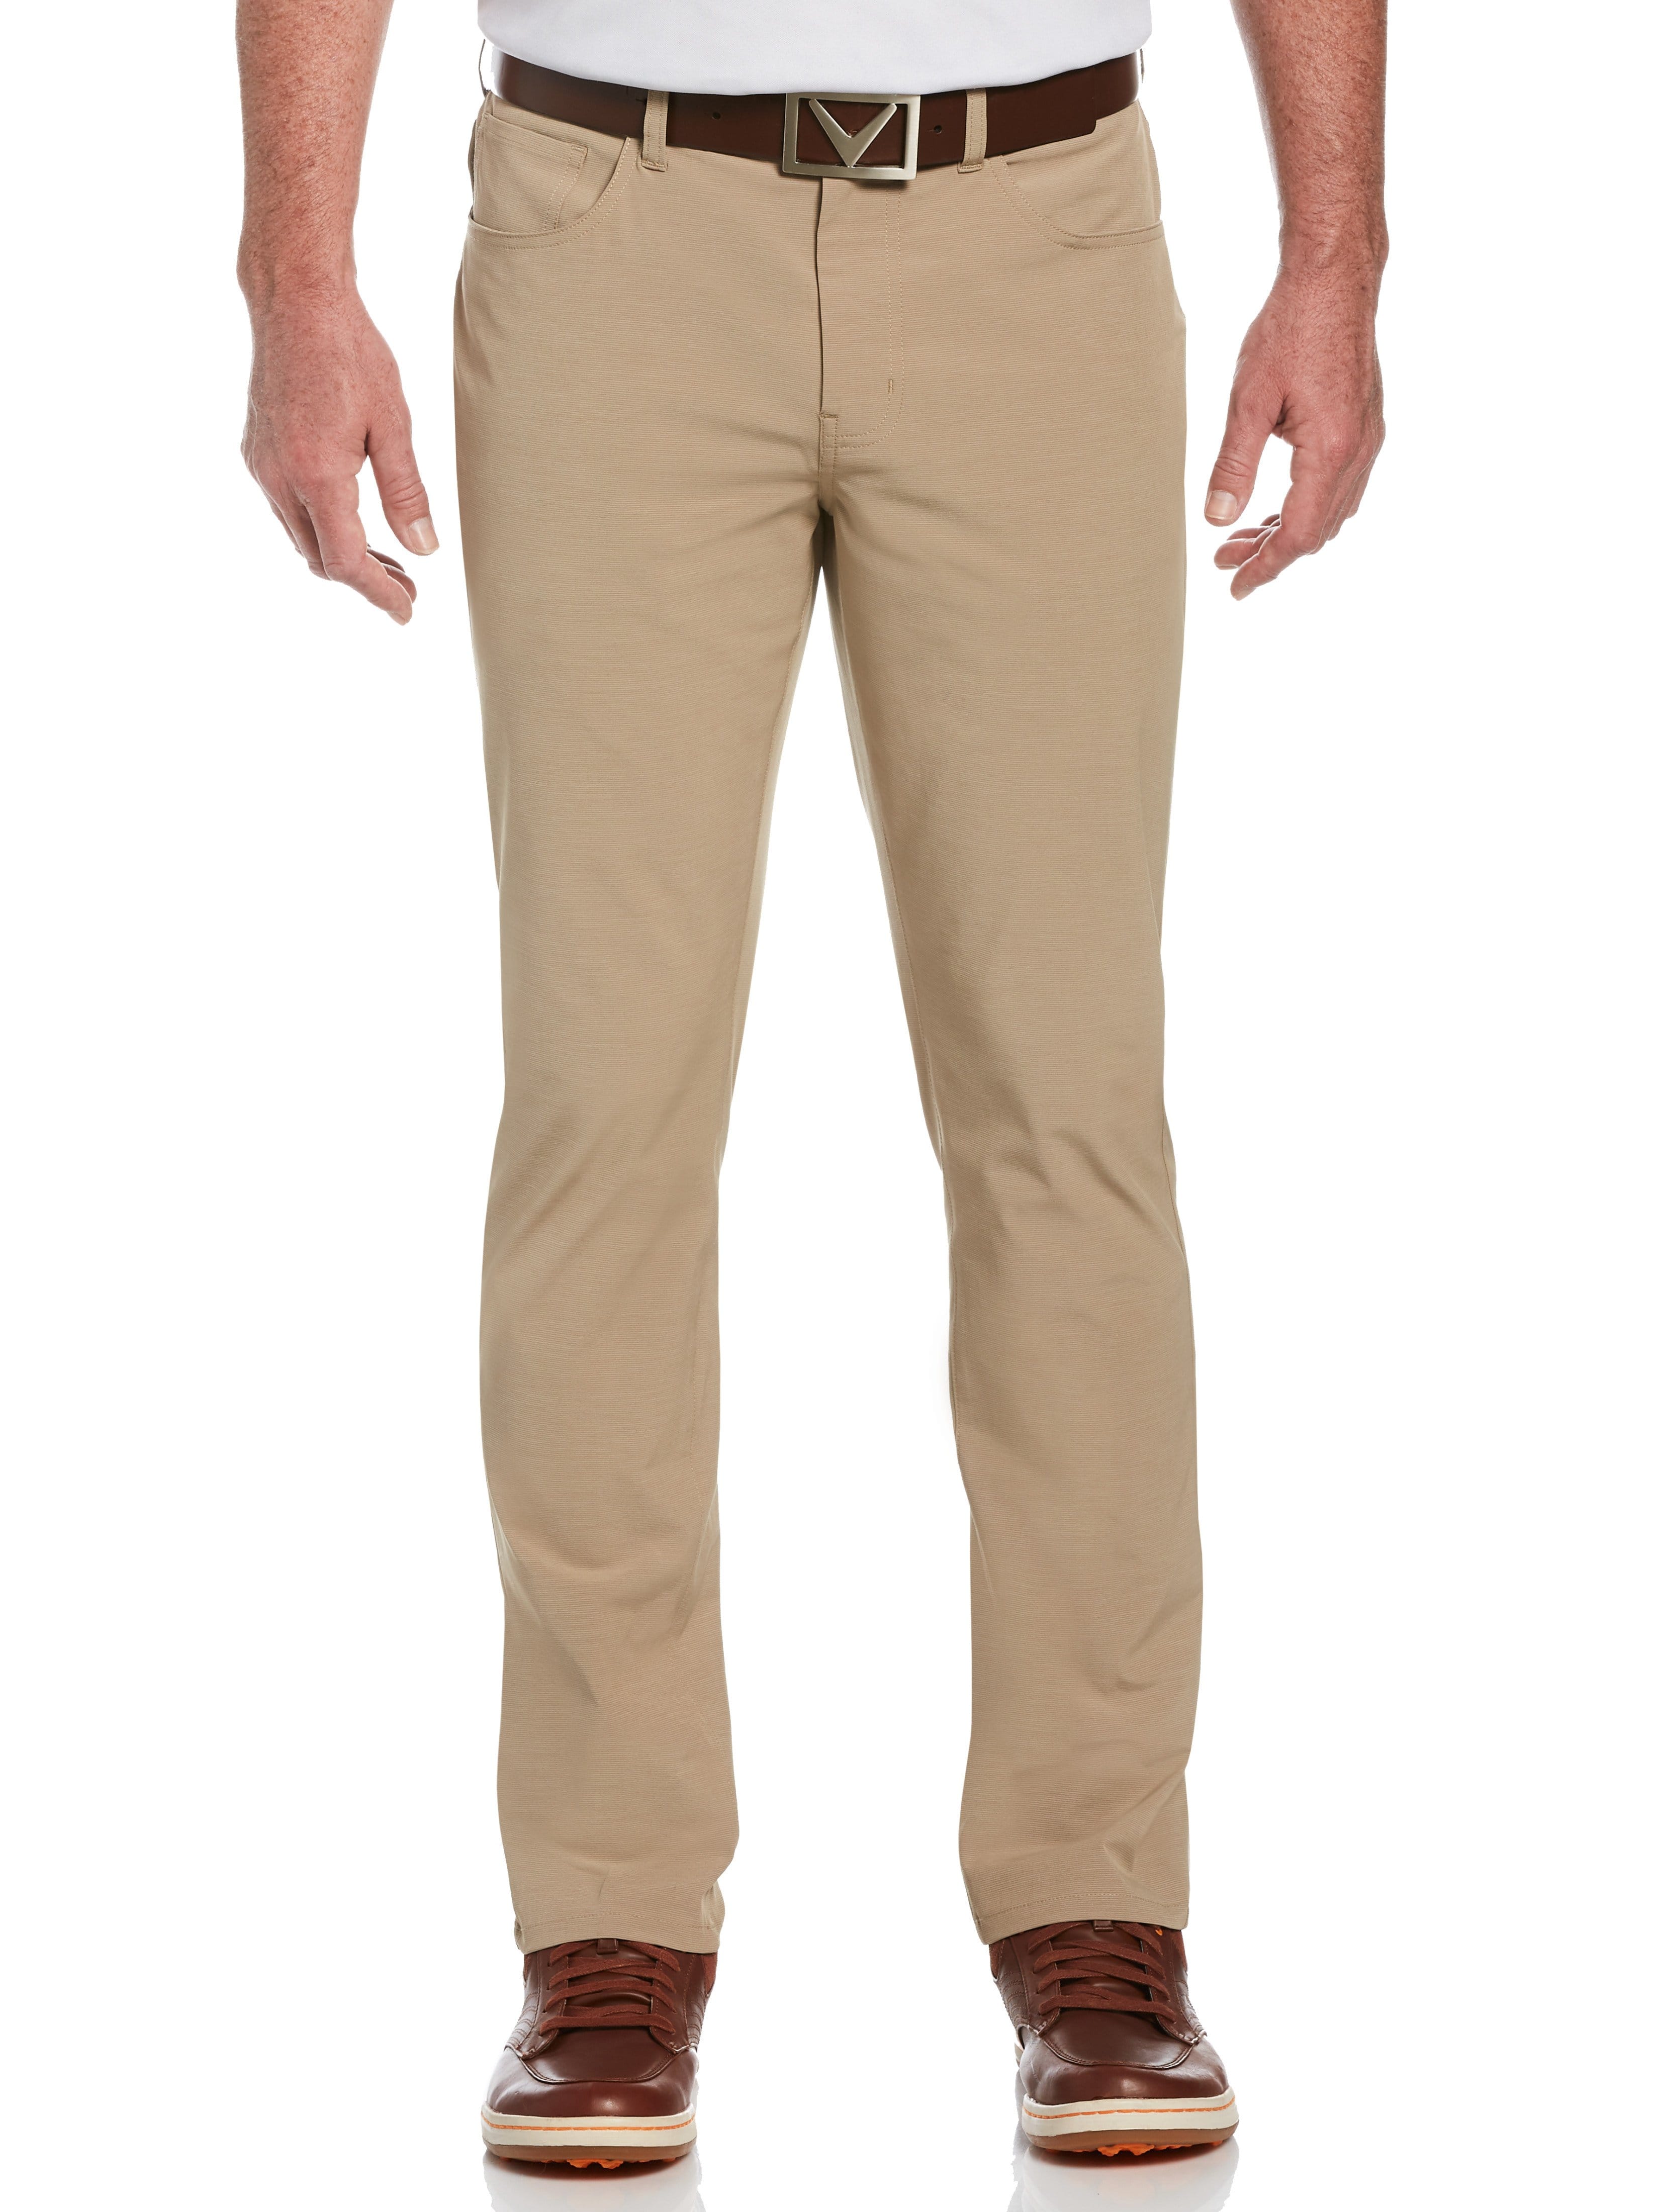 Callaway Apparel Mens Big & Tall EverPlay™ 5-Pocket Pants, Size 56 x 30, Khaki Heather Beige, Polyester/Cotton/Elastane | Golf Apparel Shop